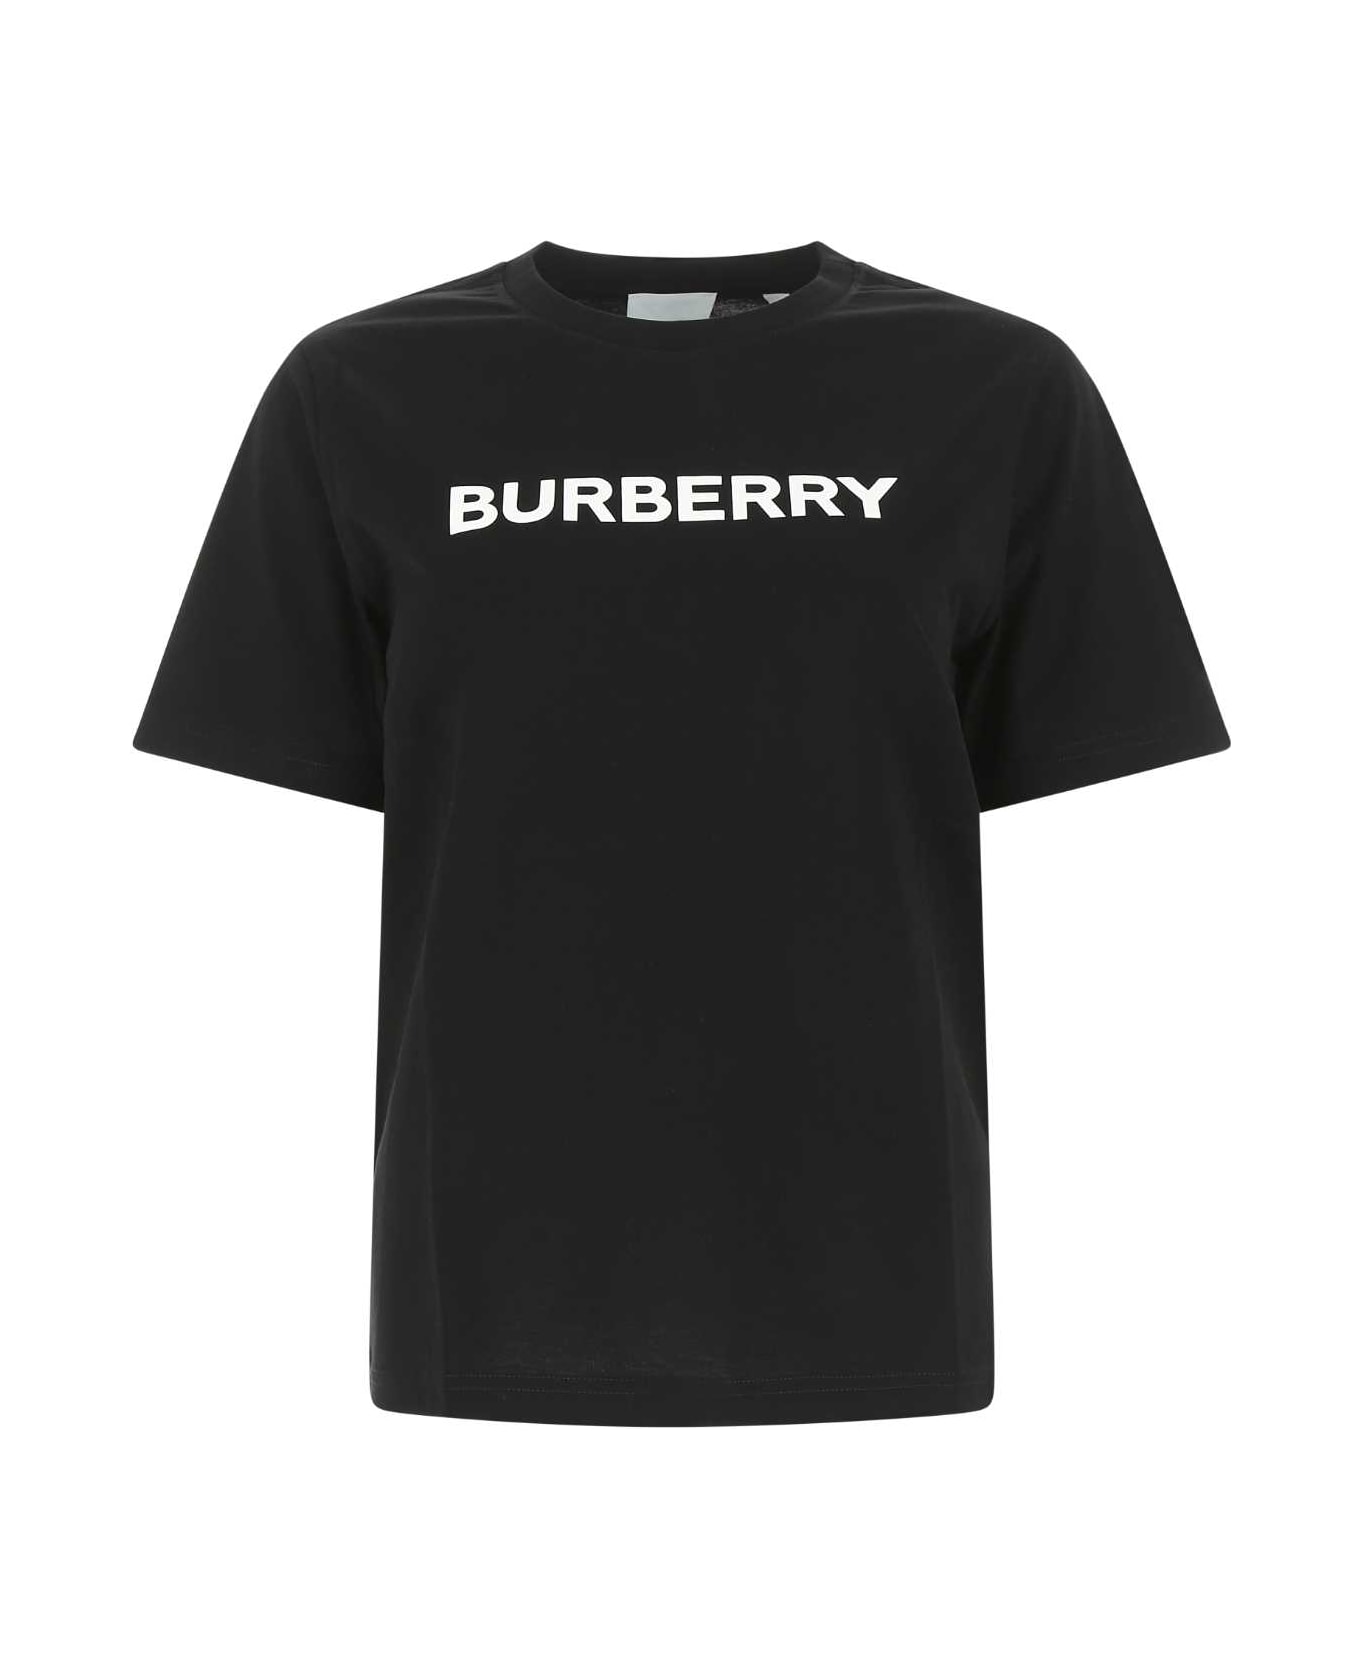 Burberry Black Cotton T-shirt - A1189